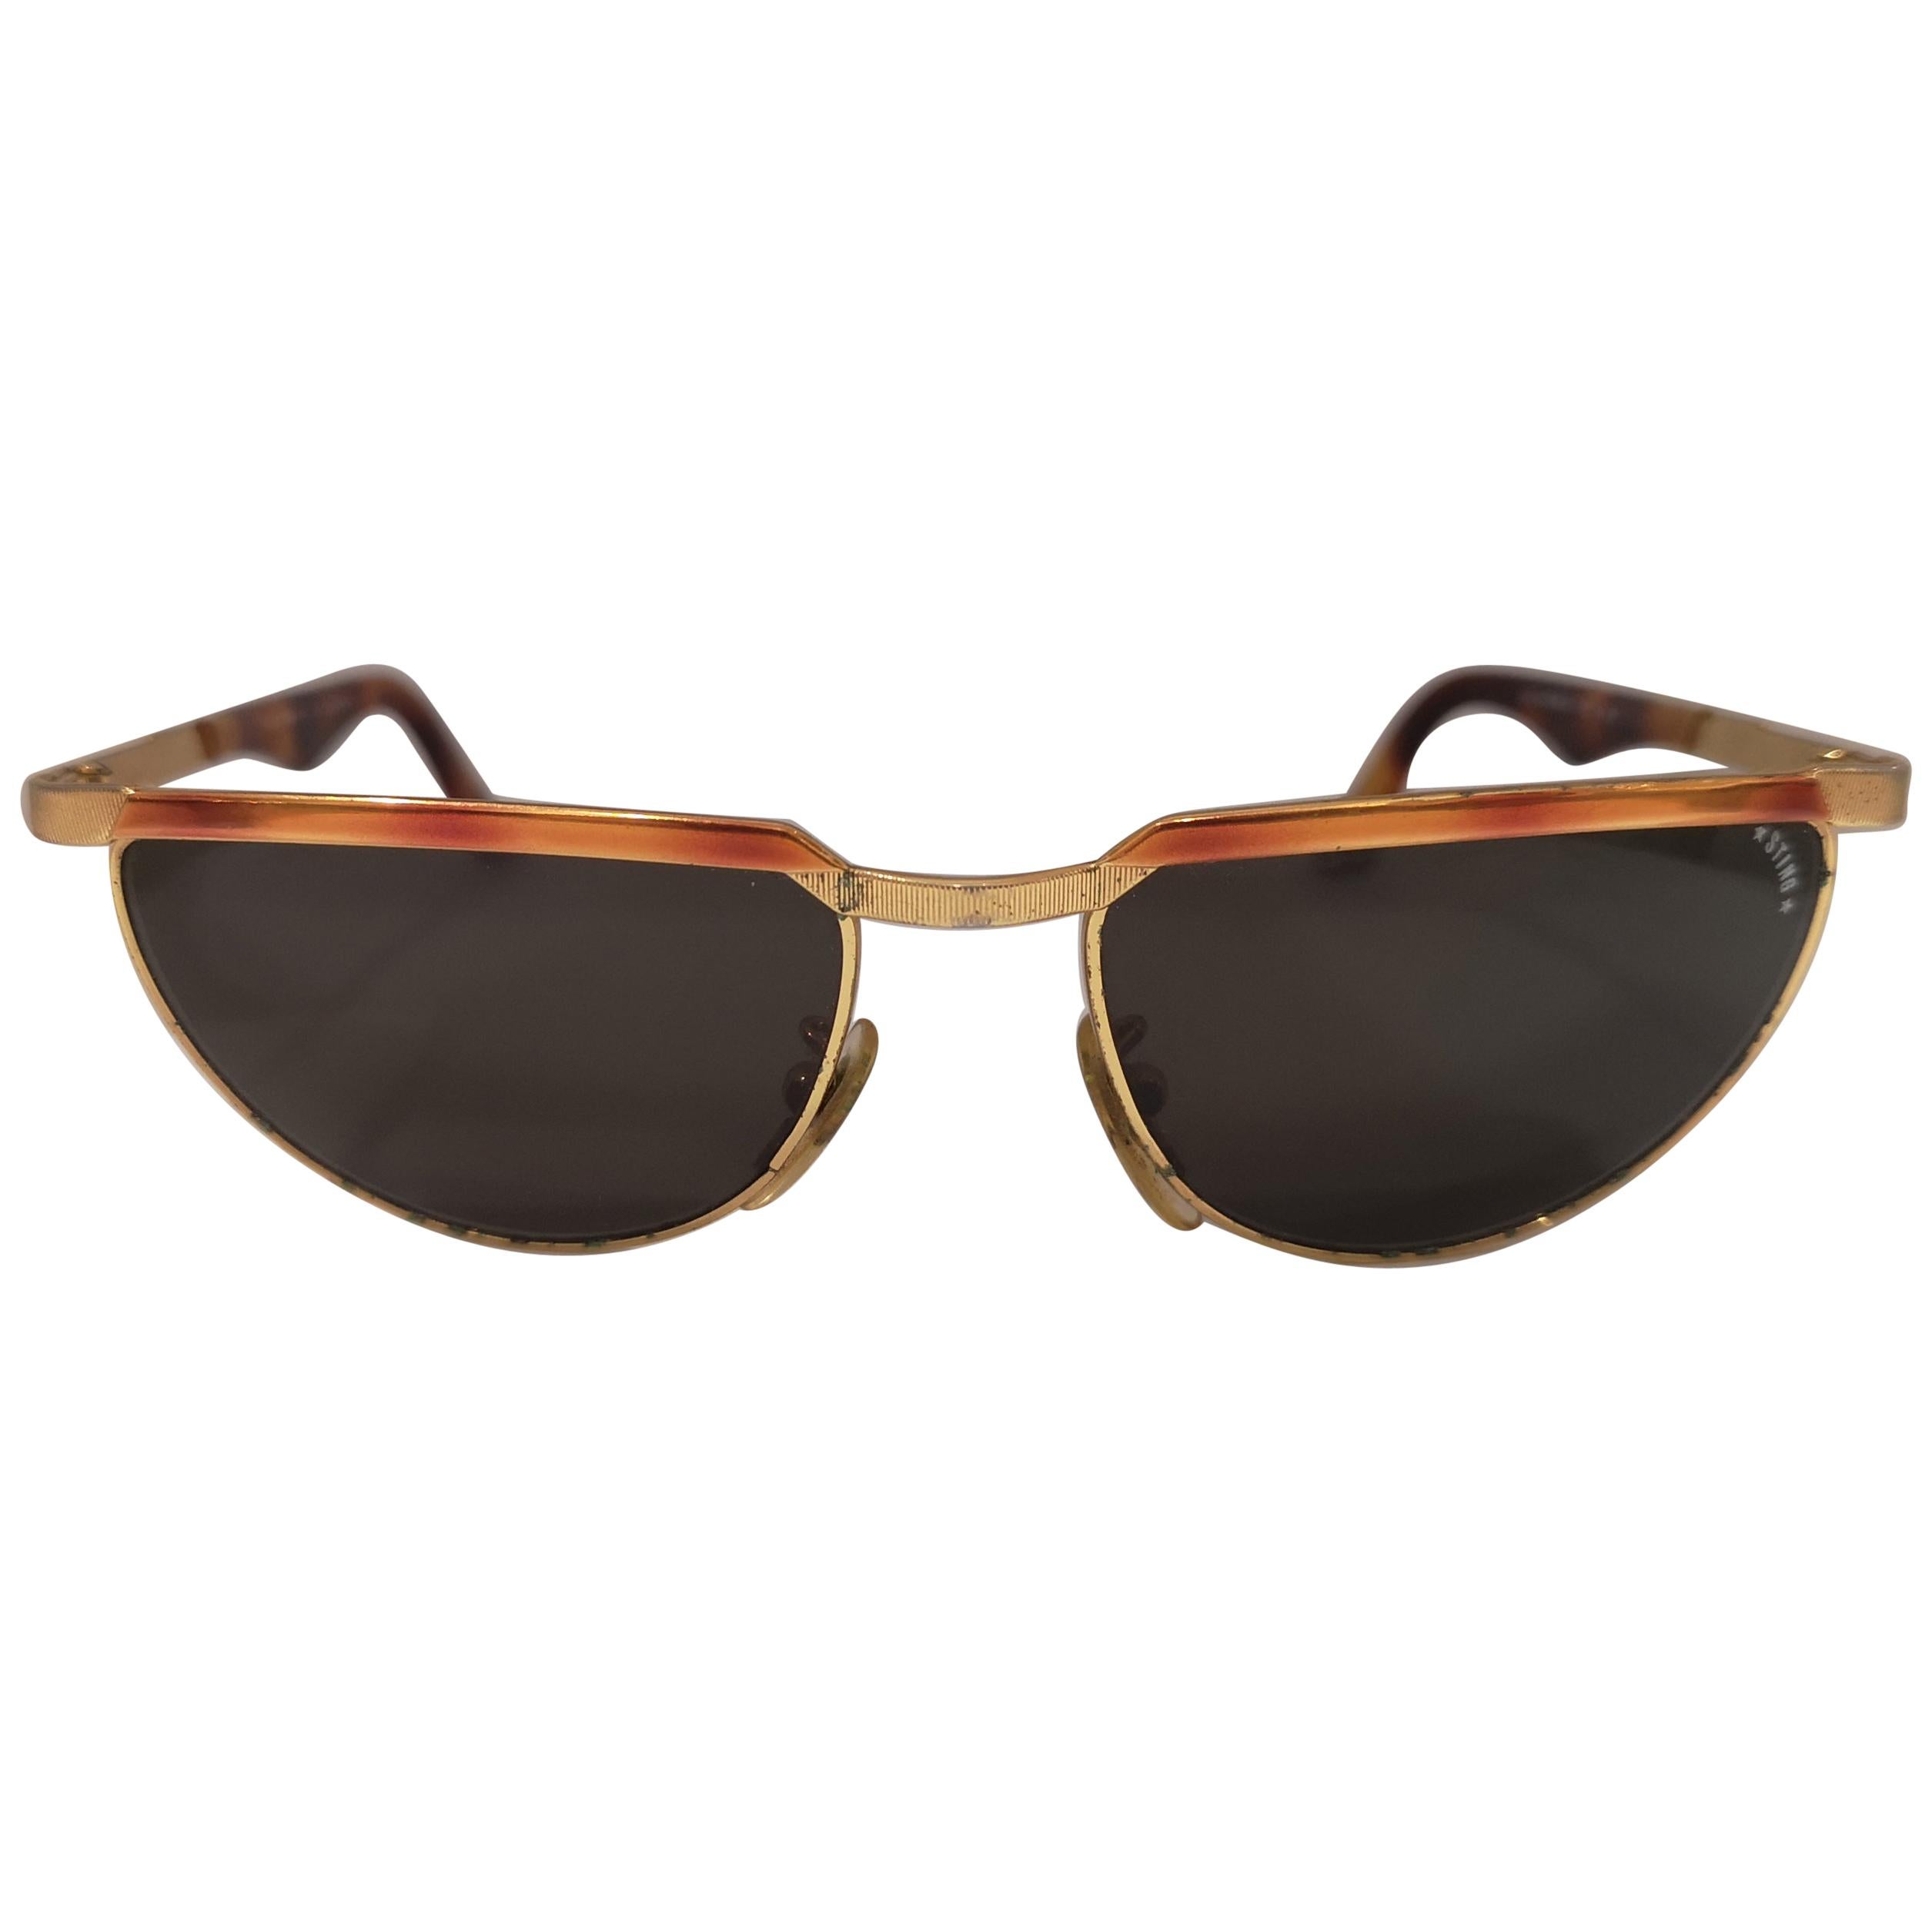 Sting black lens tortoise gold sunglasses